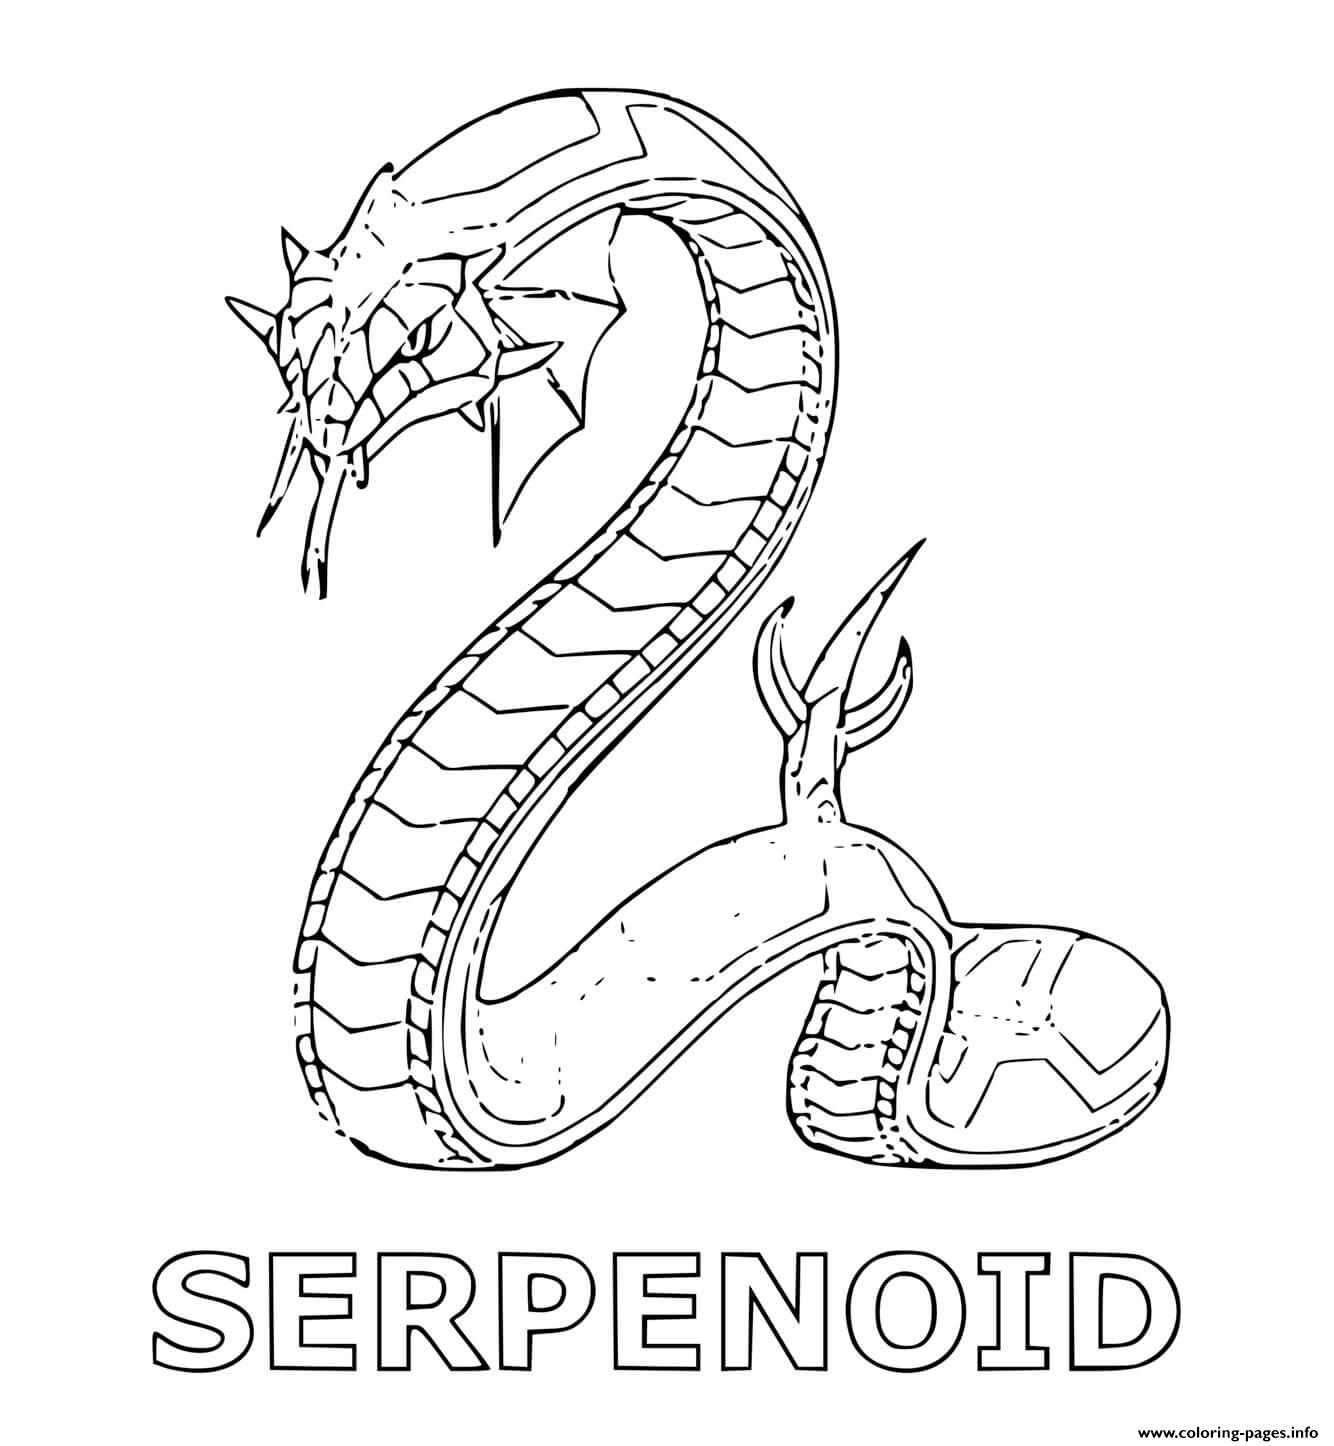 Serpenoid coloring